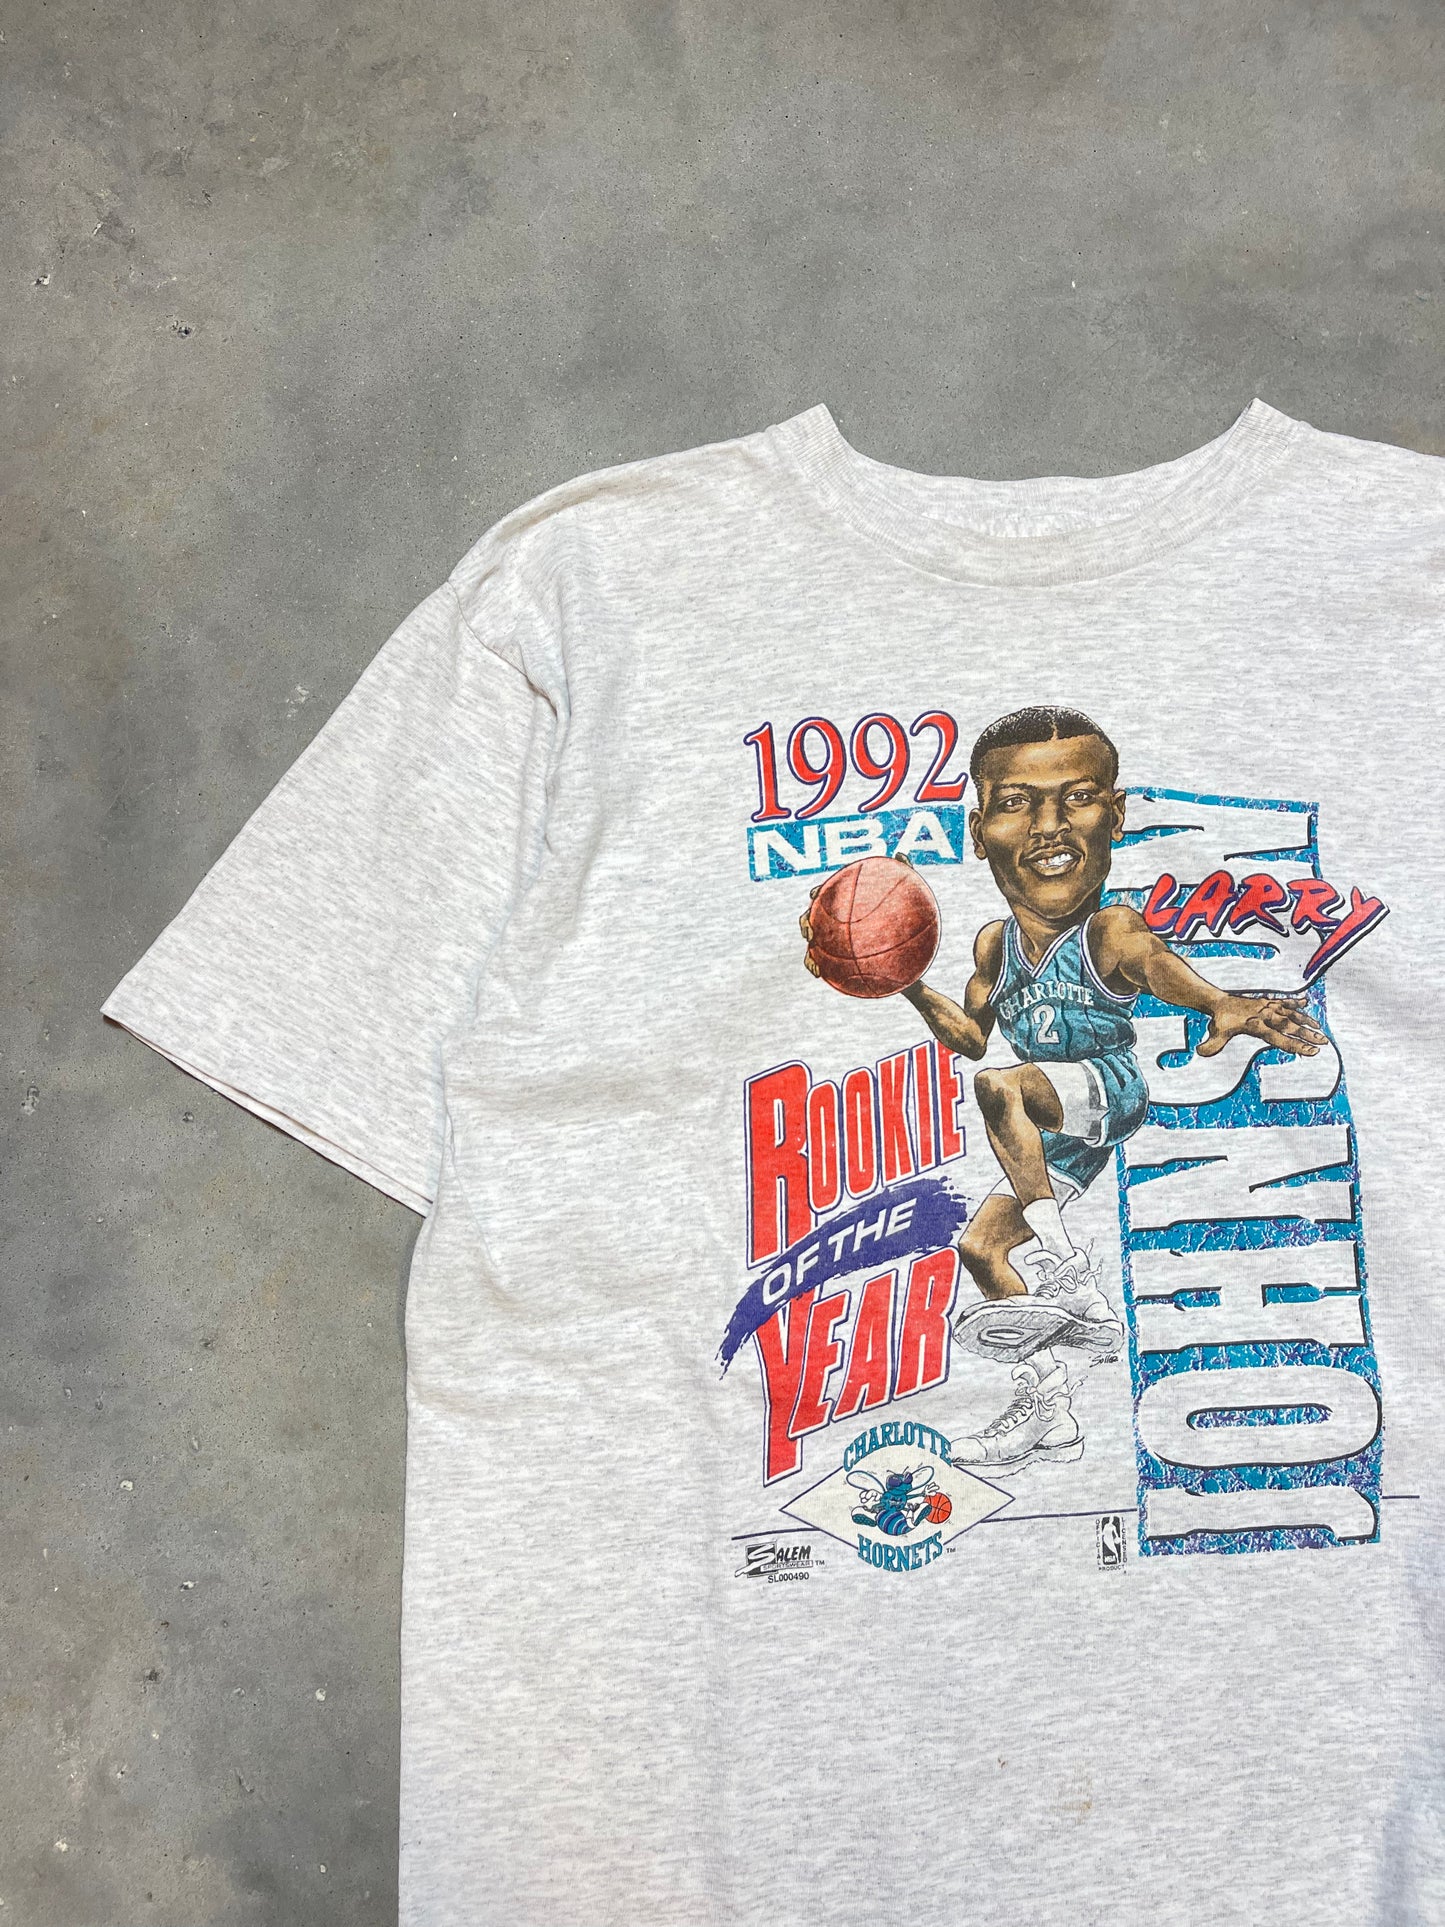 1992 Charlotte Hornets Larry Johnson Rookie of the Year Vintage Salem Sportswear NBA Tee (Medium)